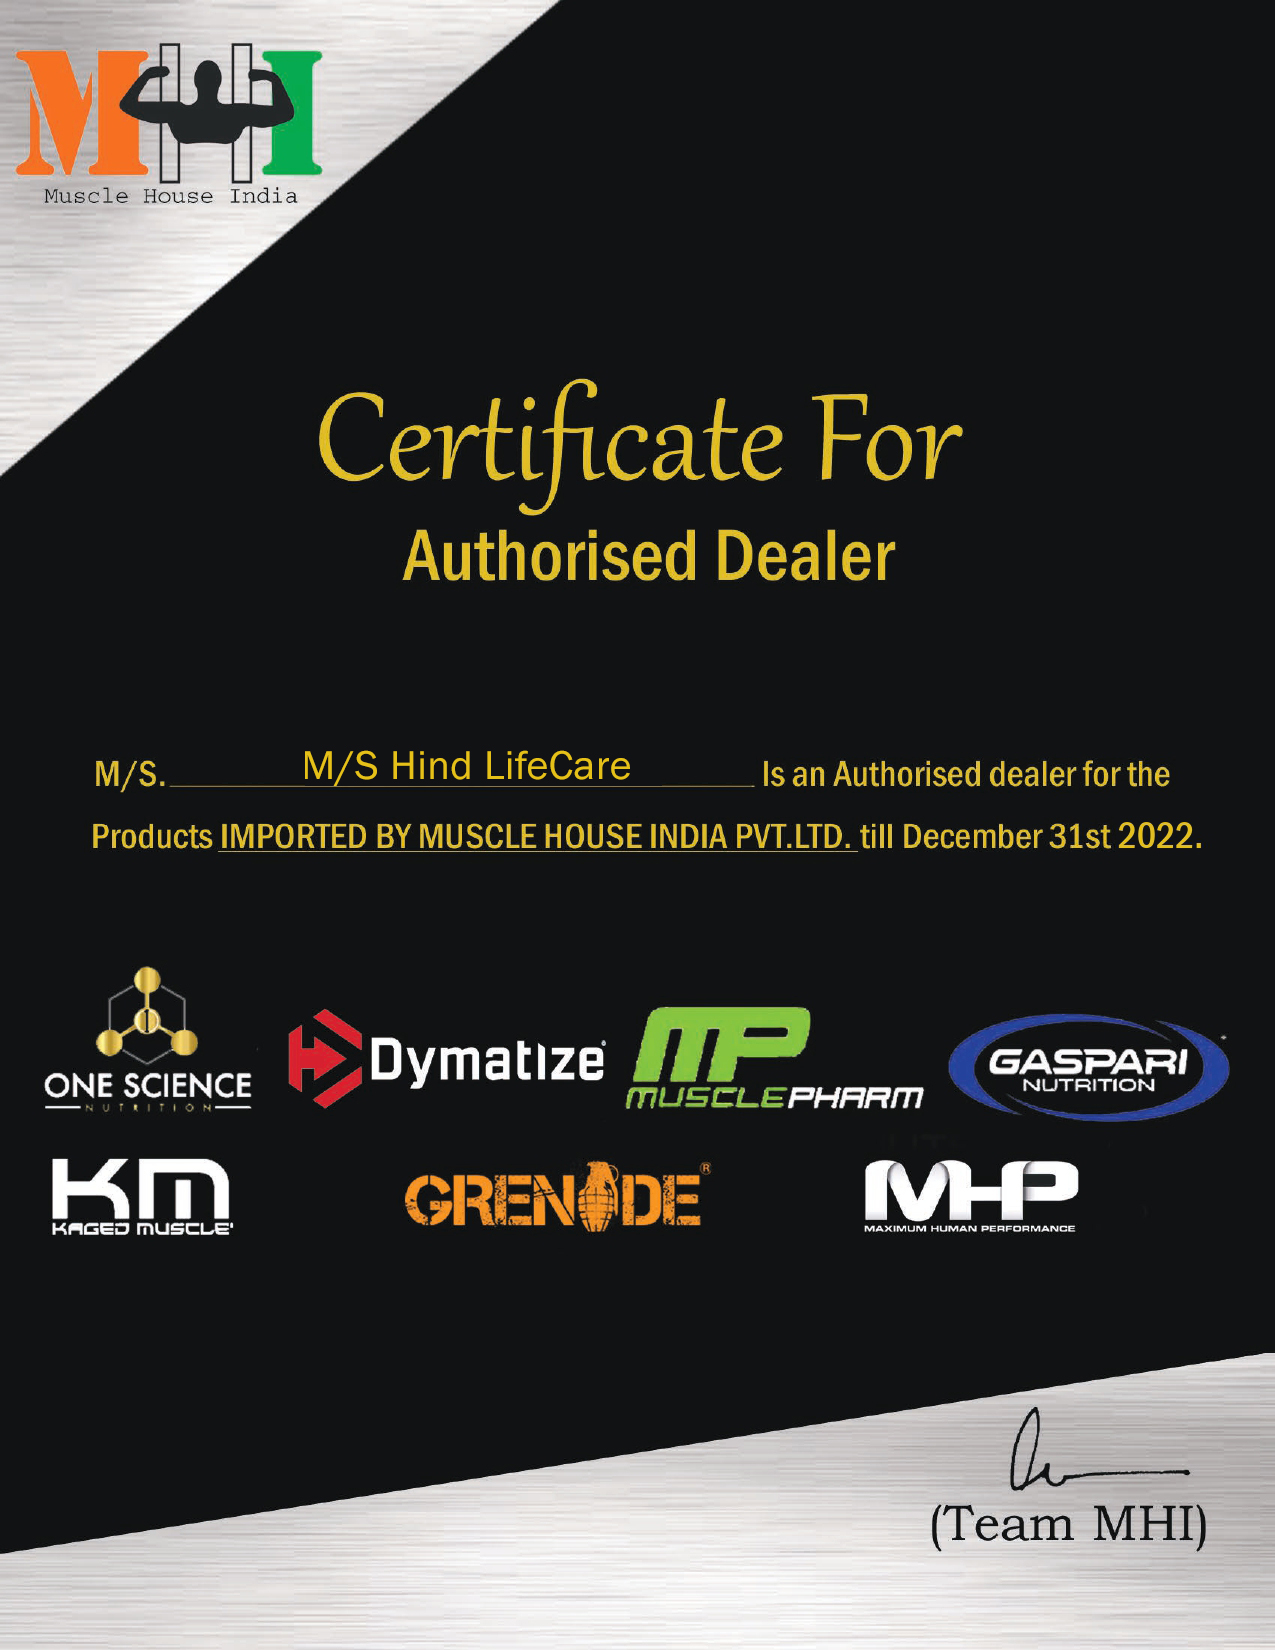 MHI Certificate